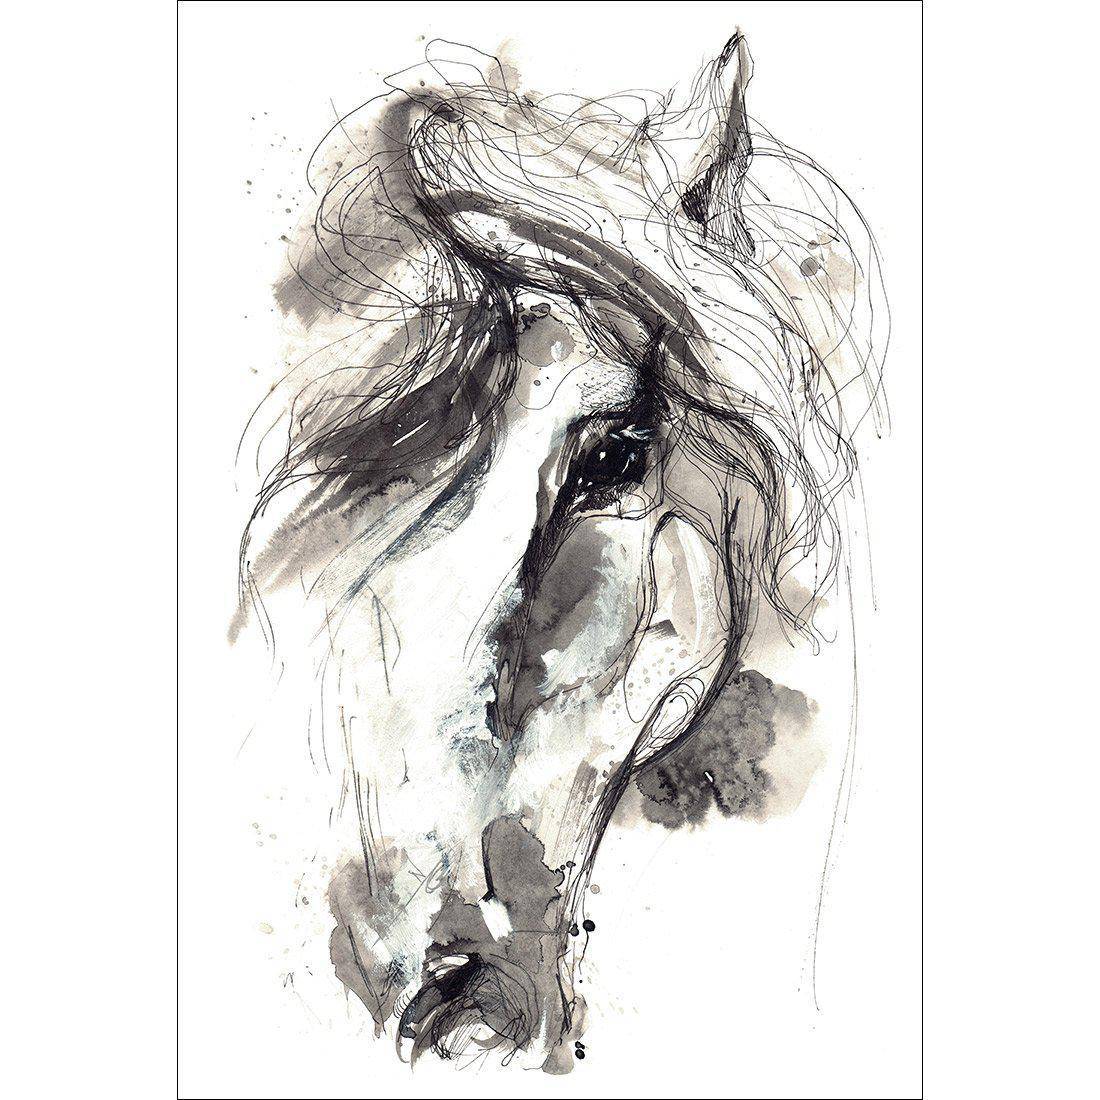 Monochrome Sketch Horse Canvas Art-Canvas-Wall Art Designs-45x30cm-Canvas - No Frame-Wall Art Designs